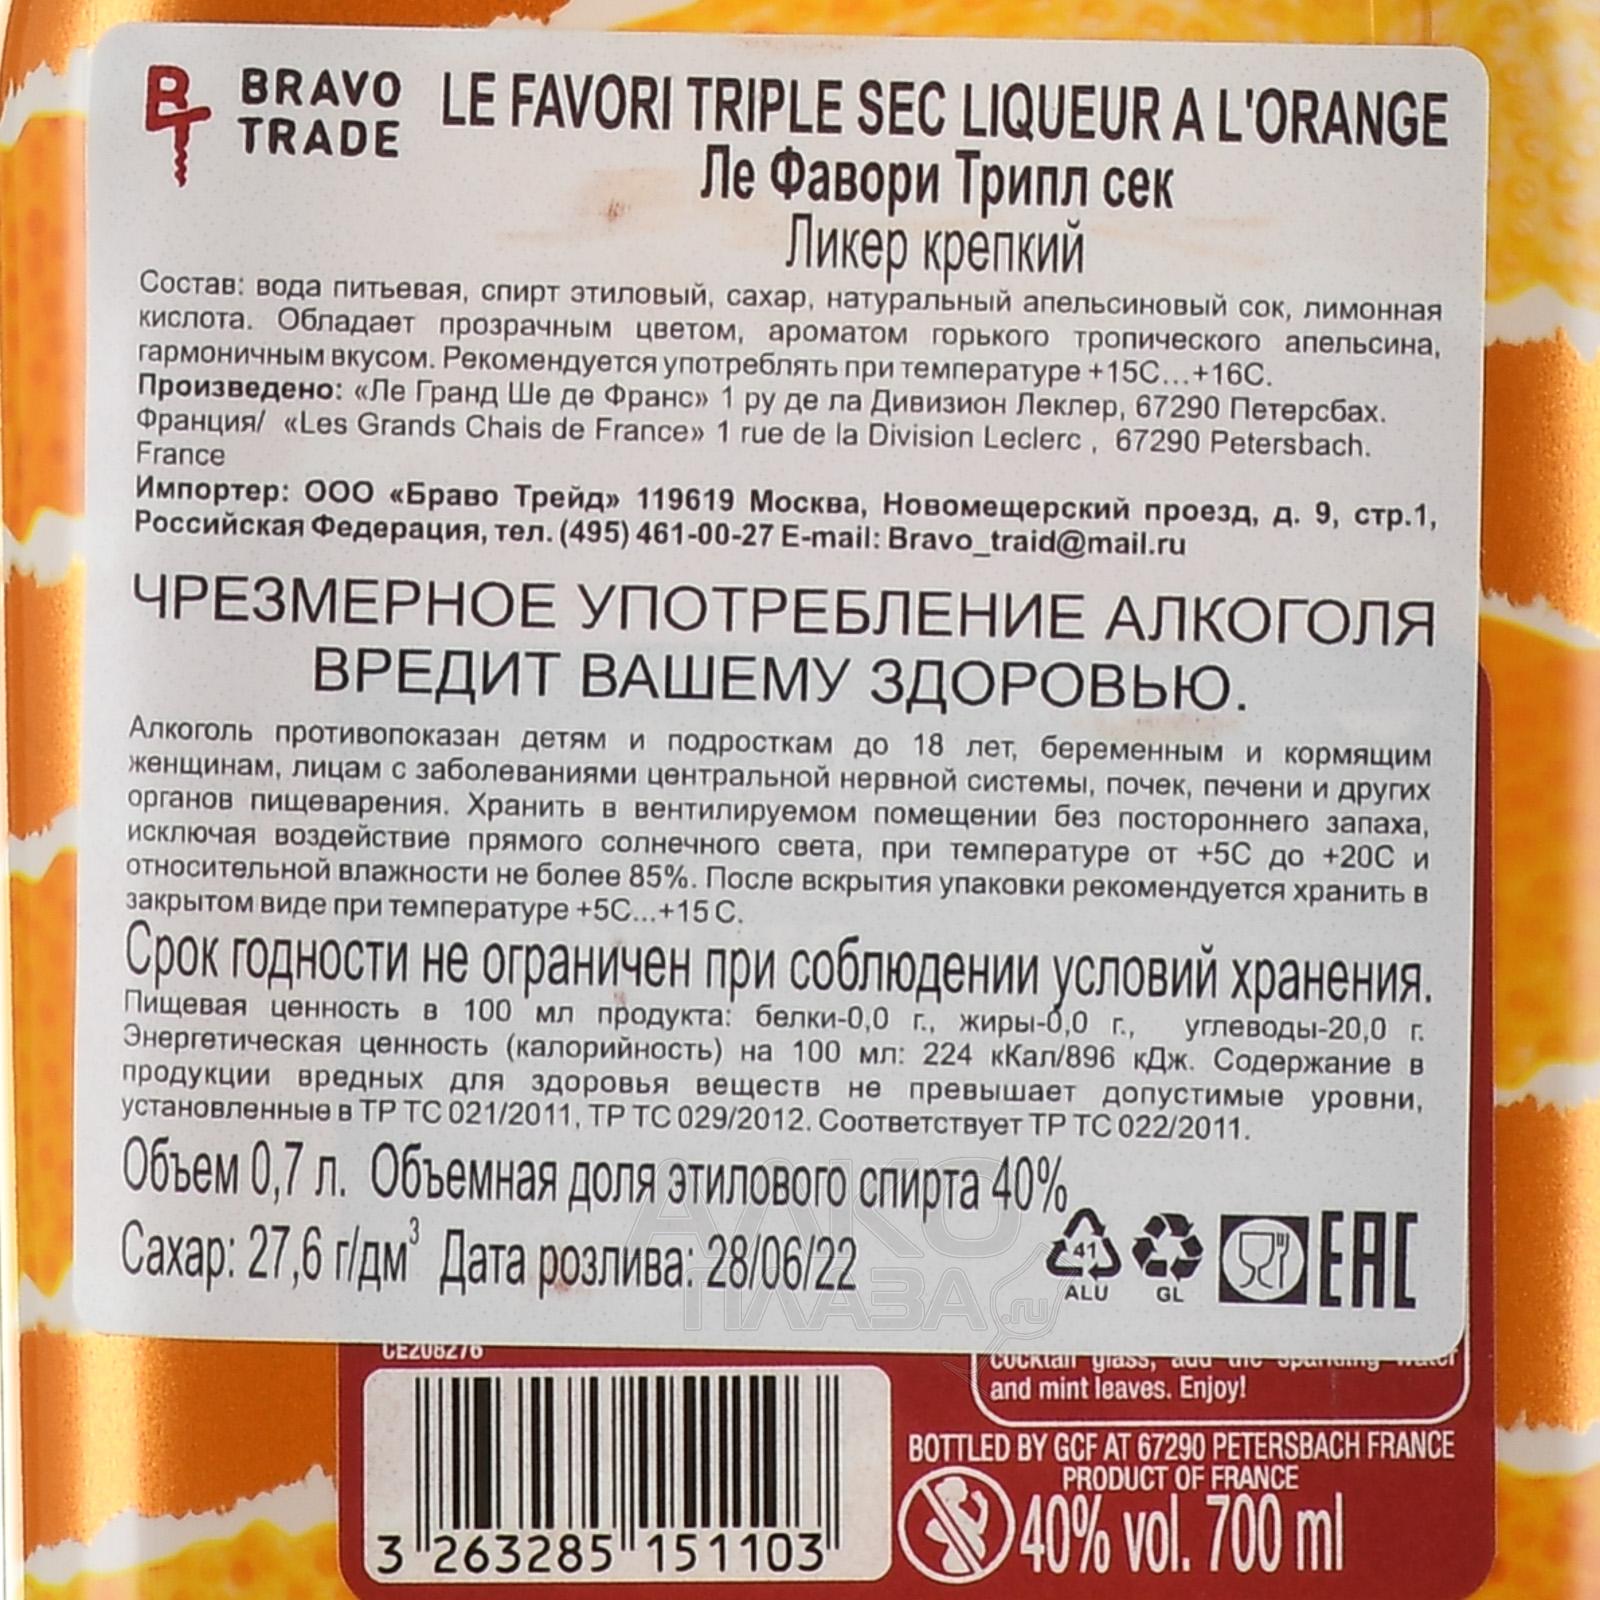 L\'Orange 0.7 Апельсин - - Фавори Favori купить Ле Sec ликер Triple Трипл л Le Liqueur сек цена